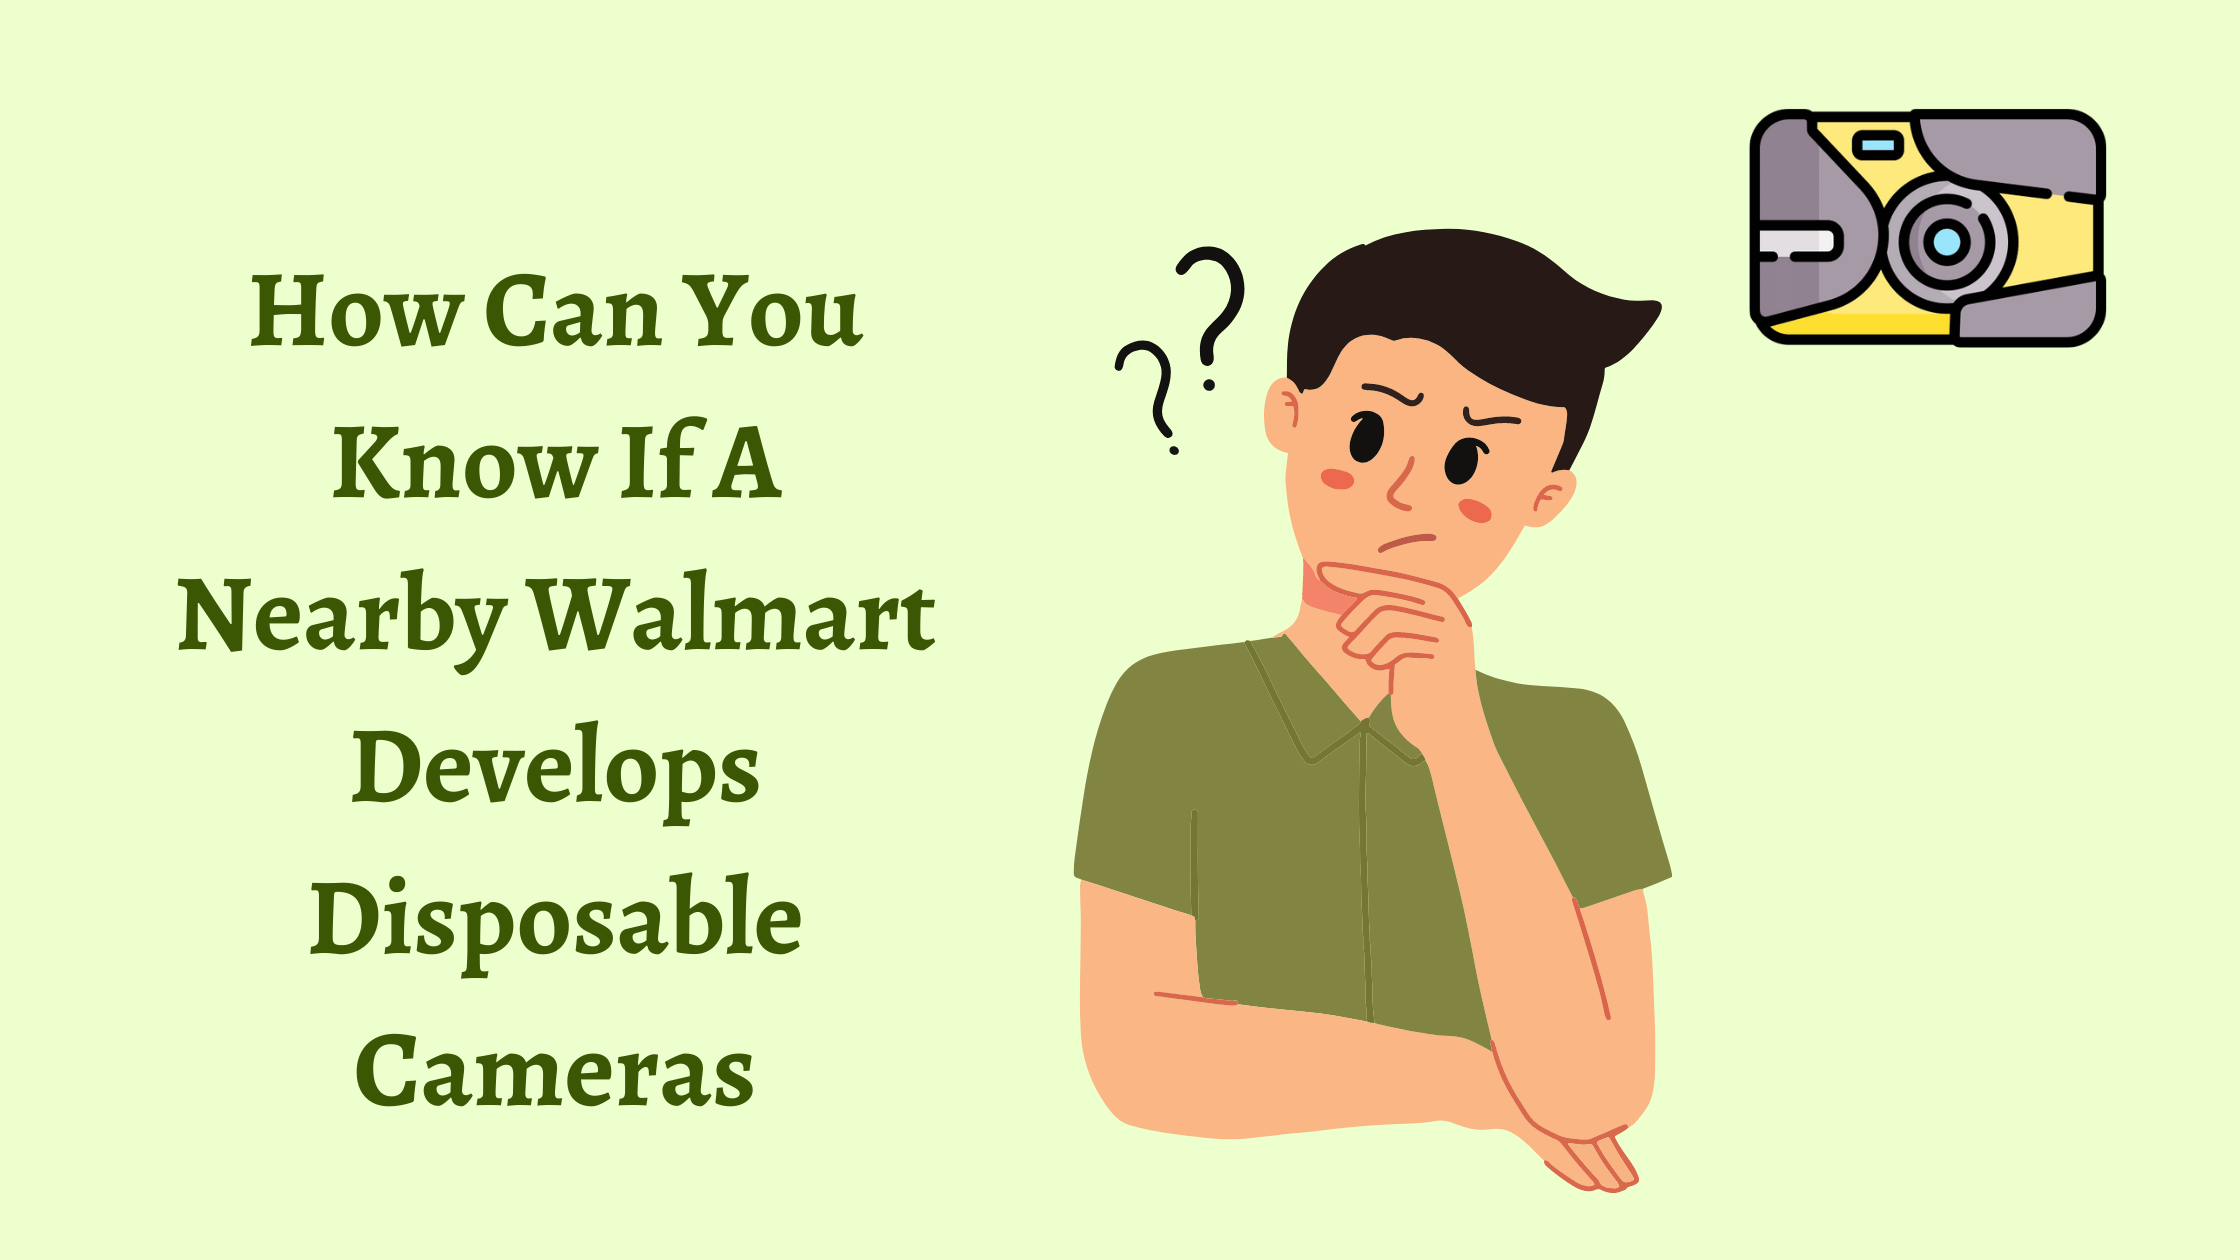 Nearby Walmart Develops Disposable Cameras